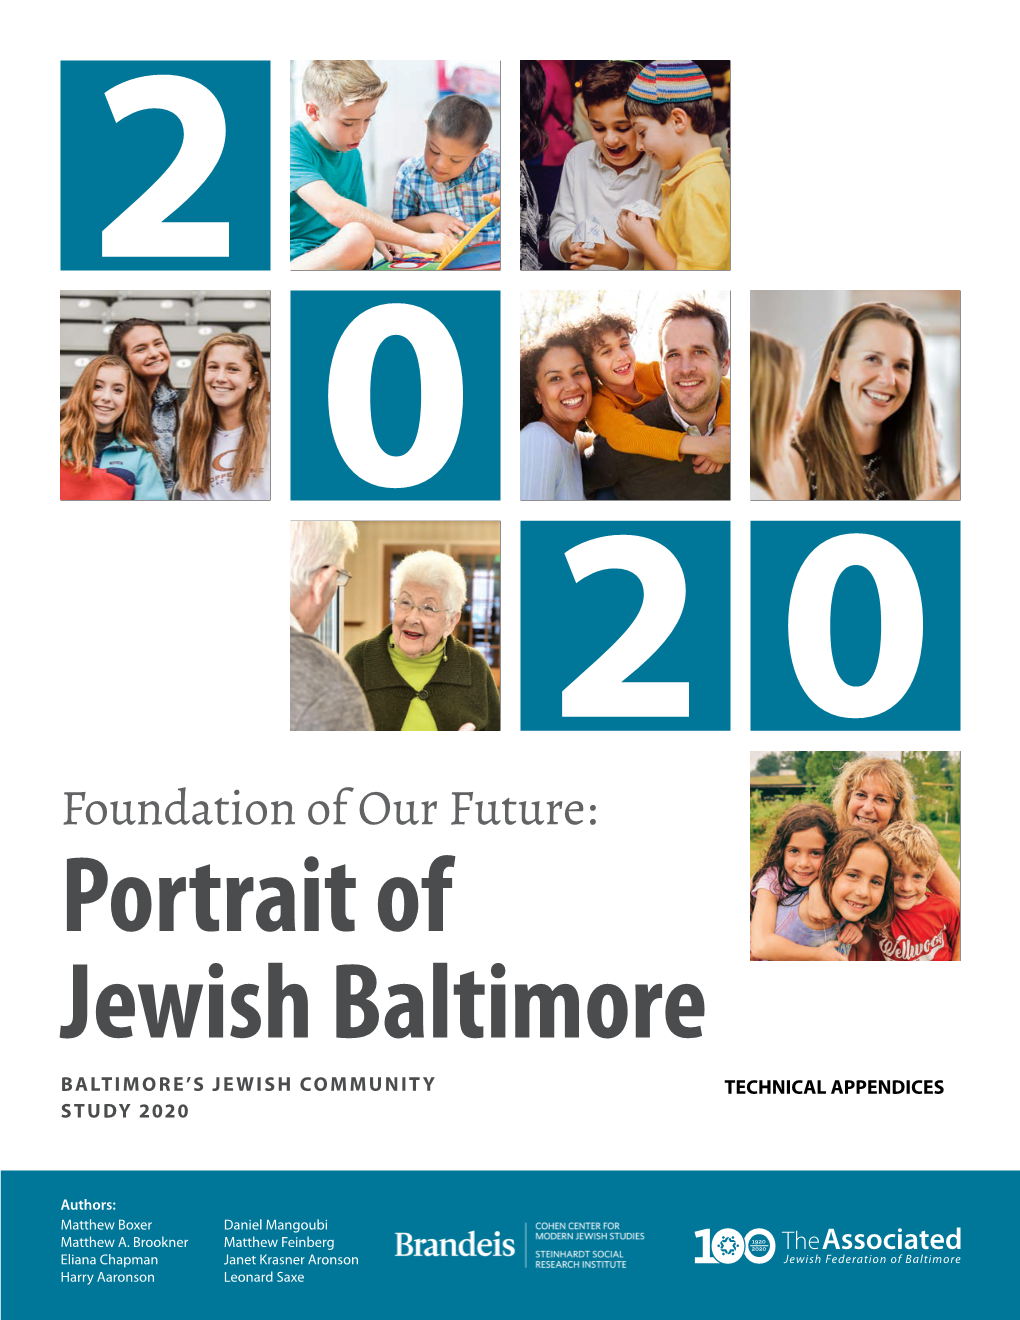 Portrait of Jewish Baltimore BALTIMORE’S JEWISH COMMUNITY TECHNICAL APPENDICES STUDY 2020